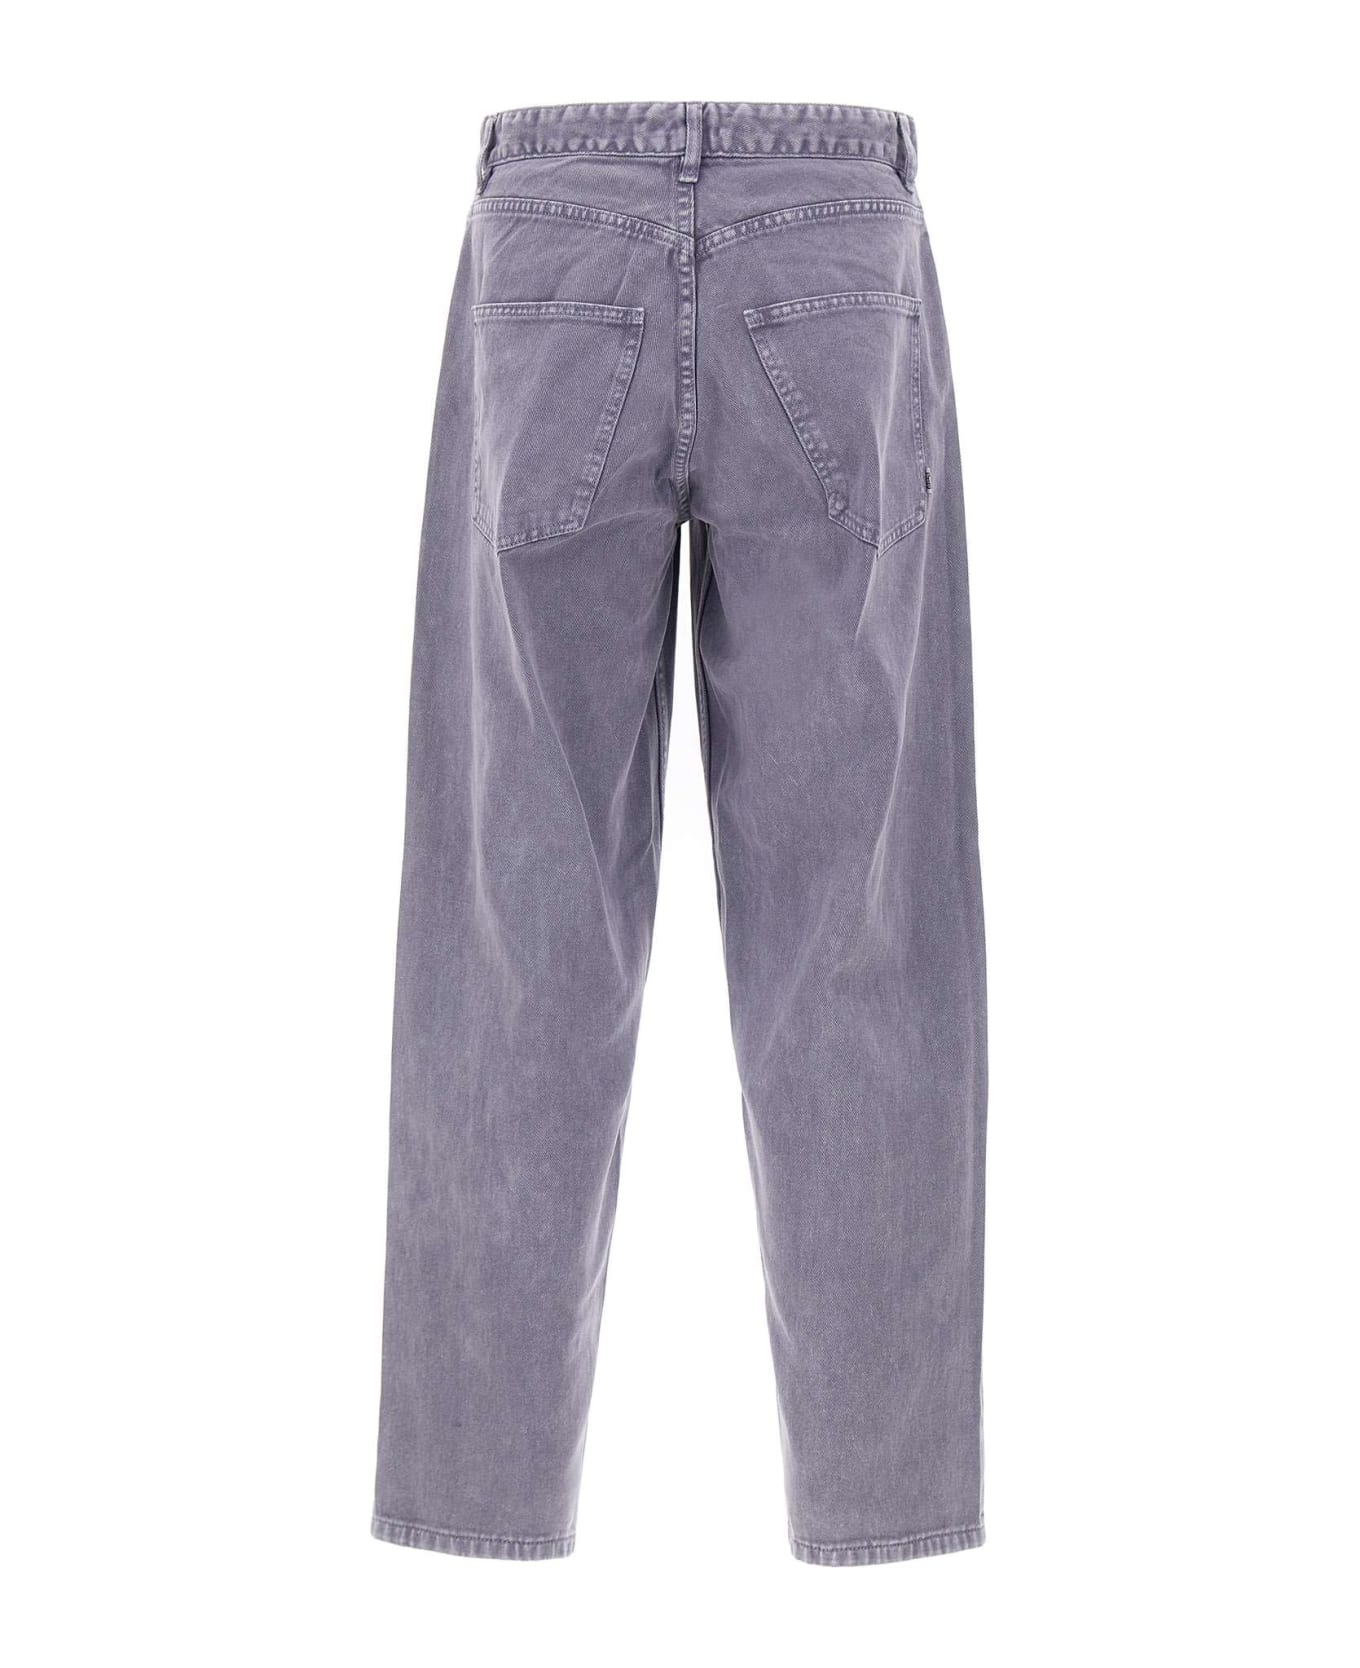 HUF 'cromer Washed Pant' Jeans - Grey